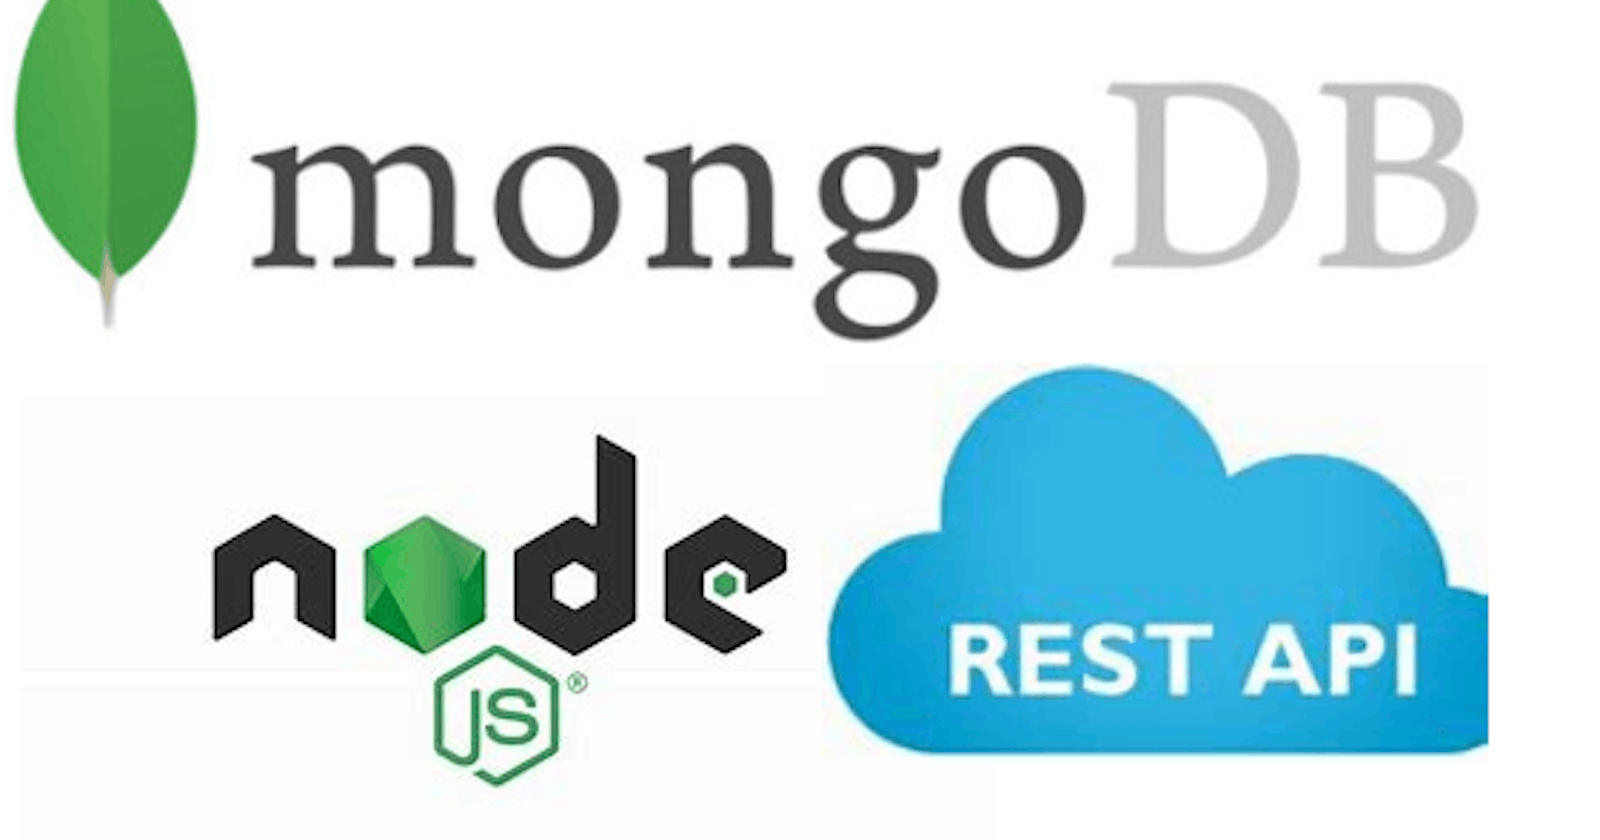 How to build a REST API using MongoDB, Express.js and Node.js